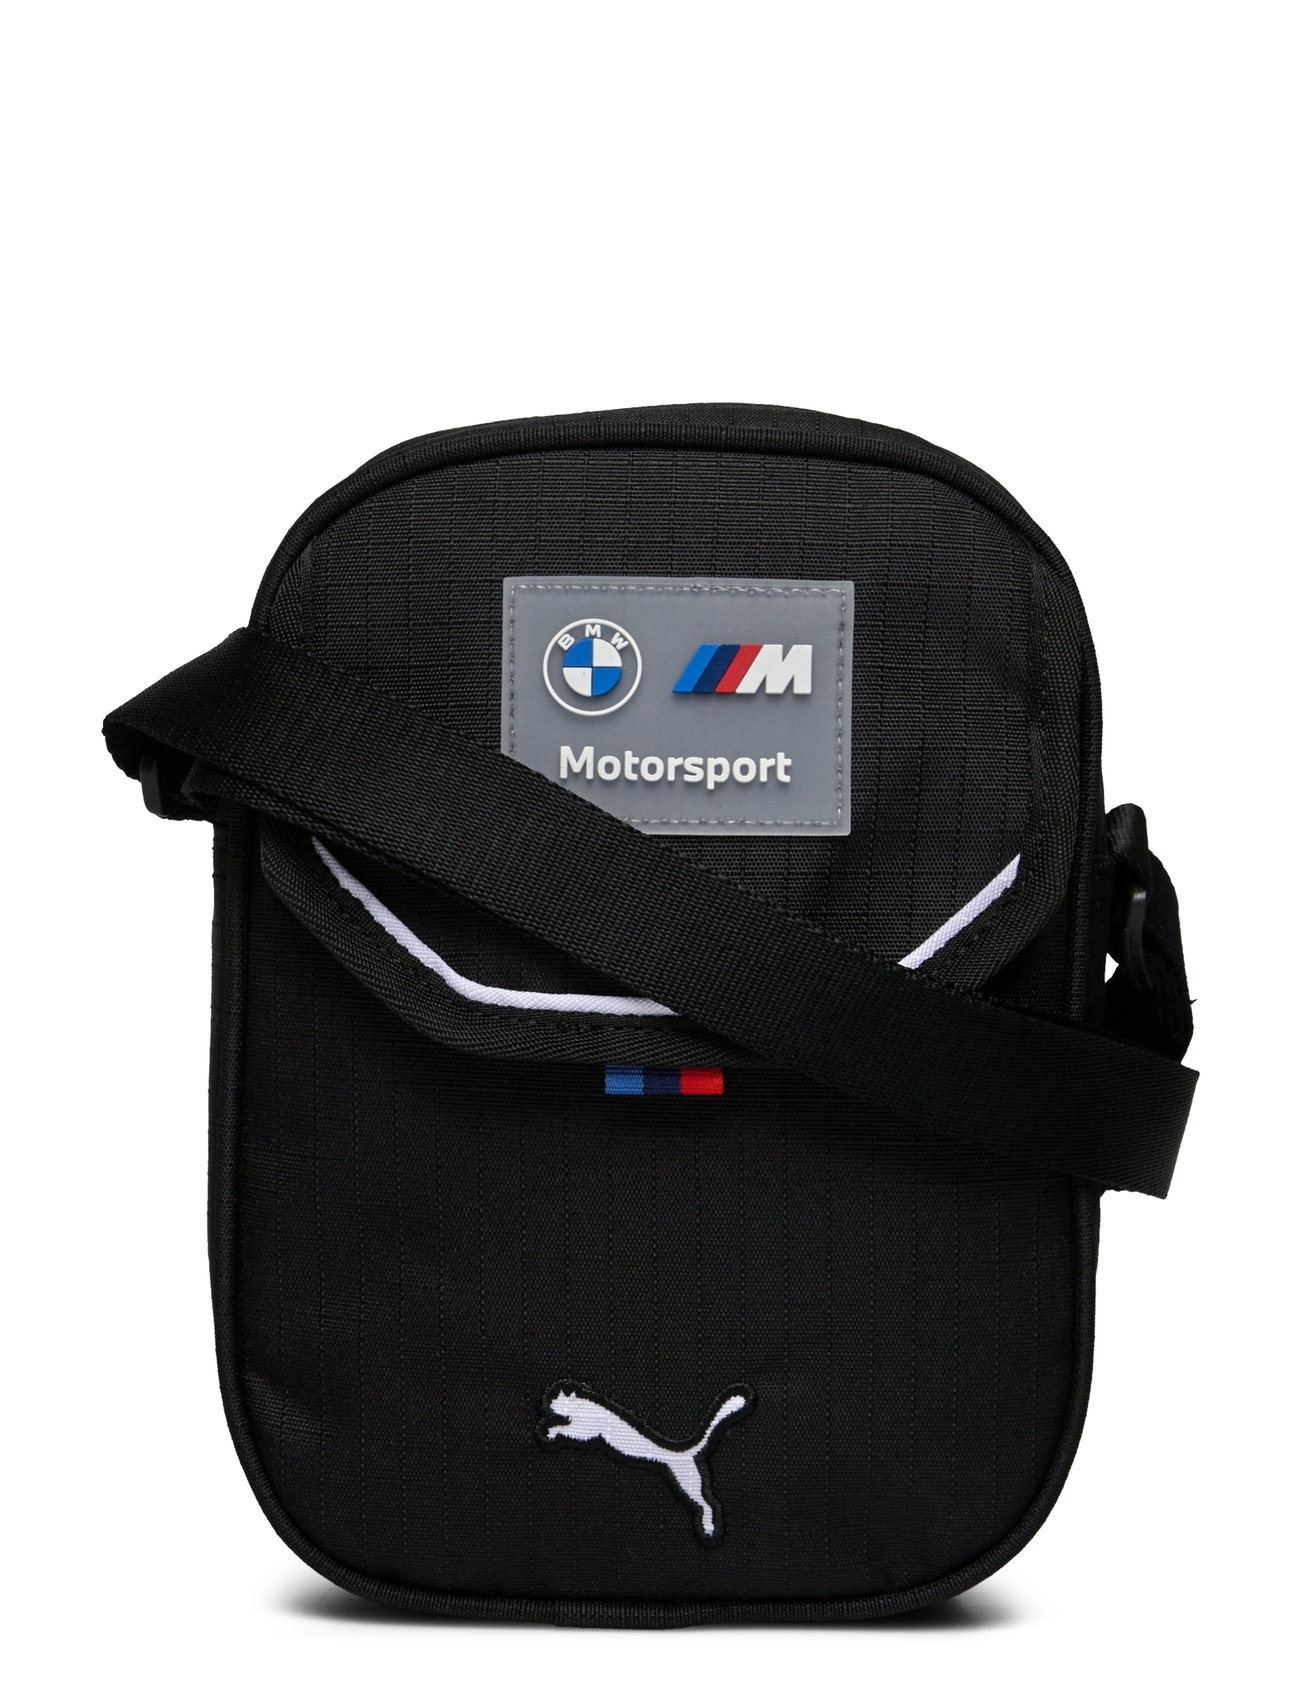 Bmw Mms Portable Sport Crossbody Bags Black PUMA Motorsport